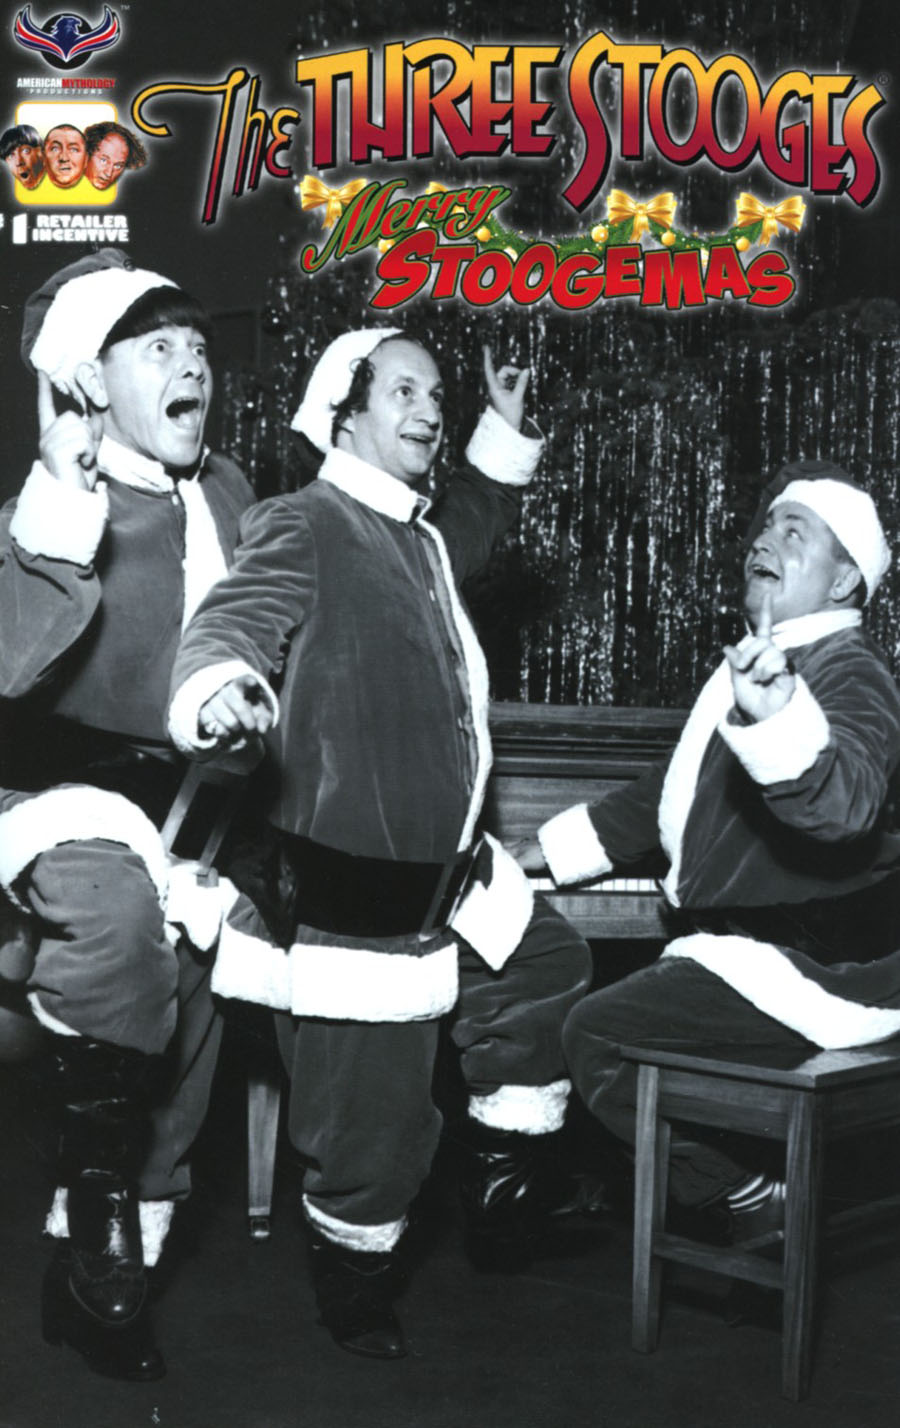 Three Stooges Merry Stoogemas Cover E Incentive Black & White Photo Variant Cover